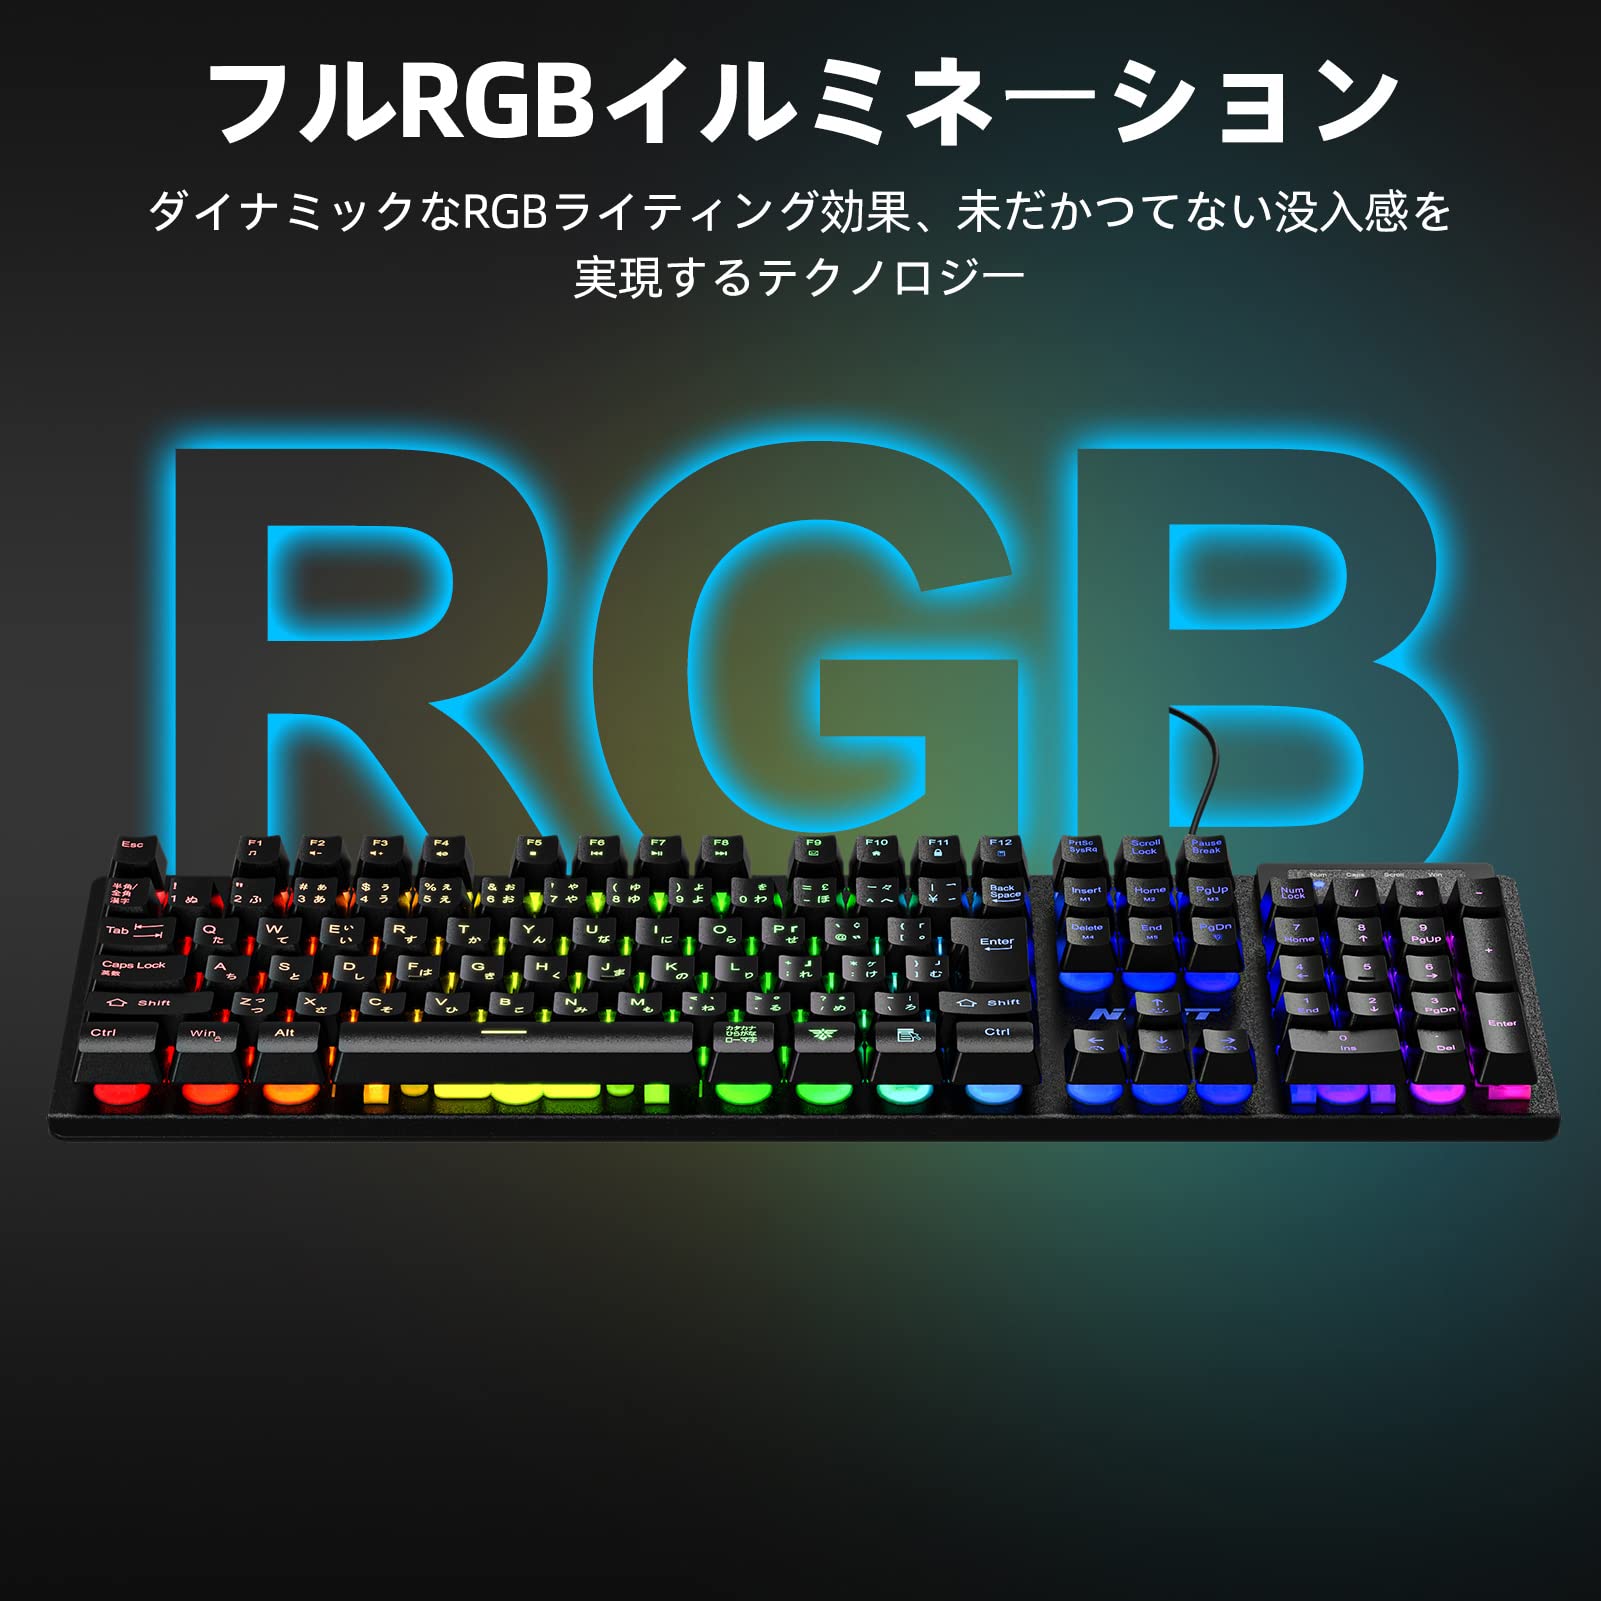 NPET gaming keyboard LED backlight 7 colors waterproof usb 26 keys ?K10V3 NEW